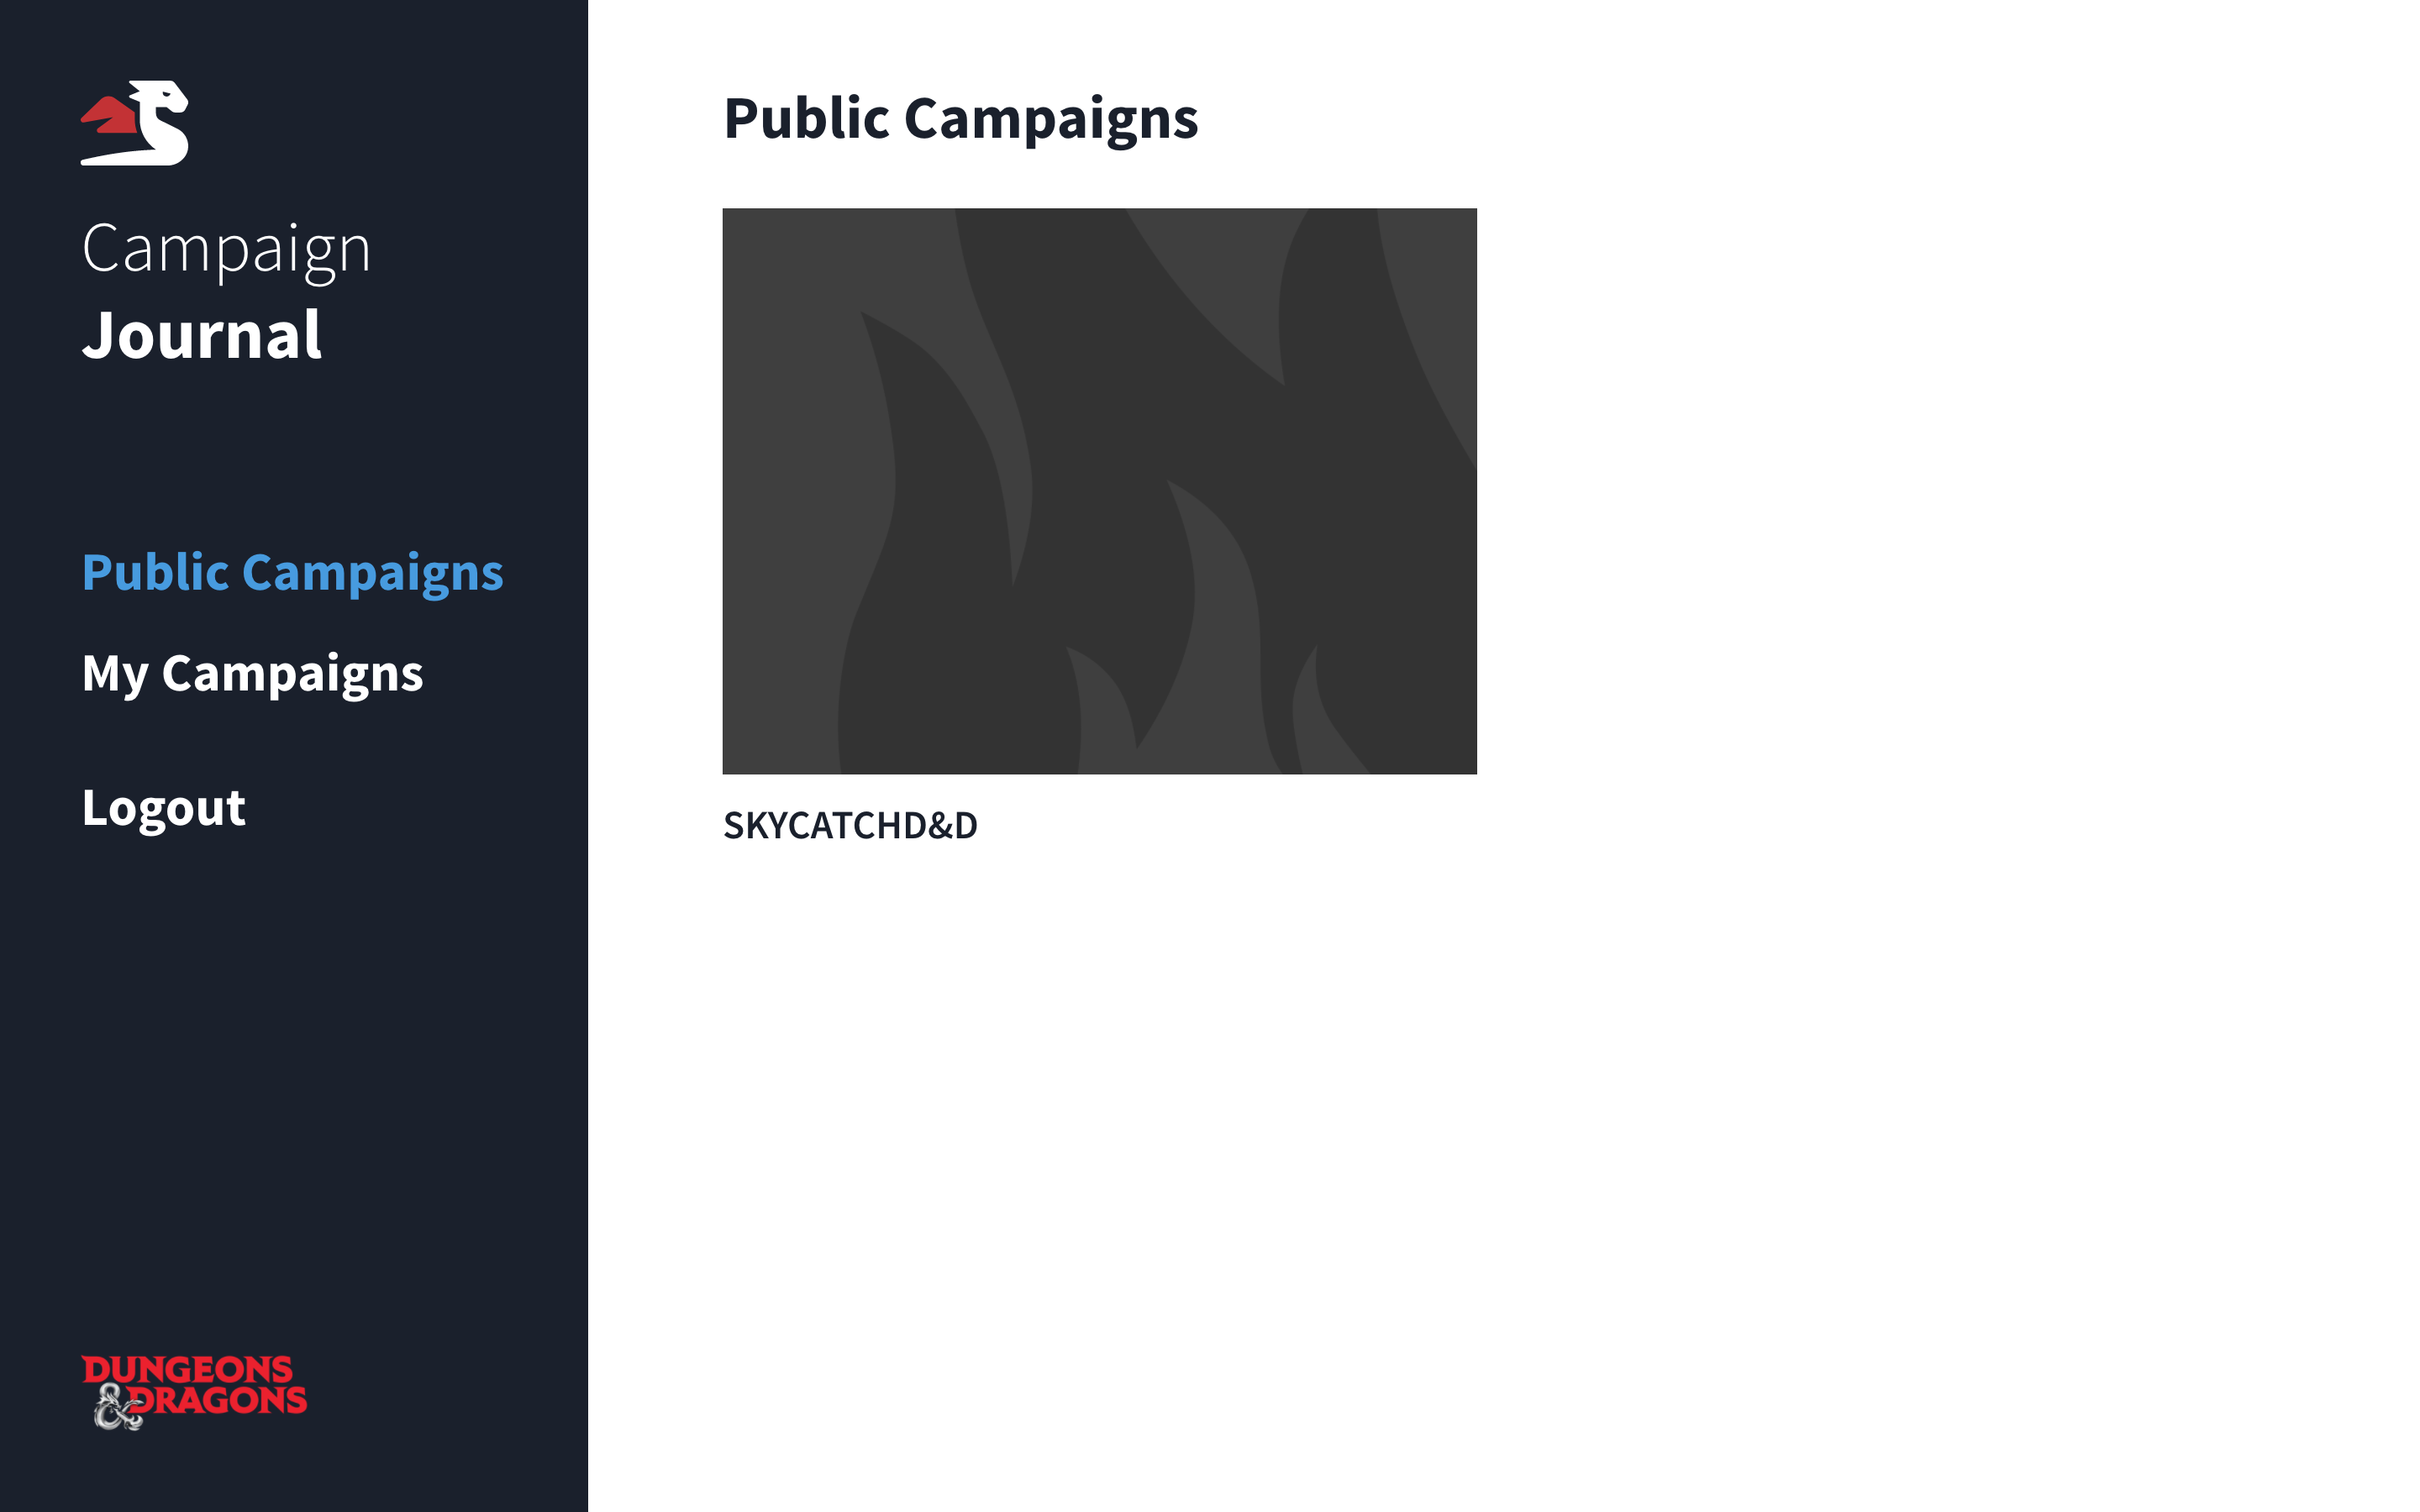 Public campaigns